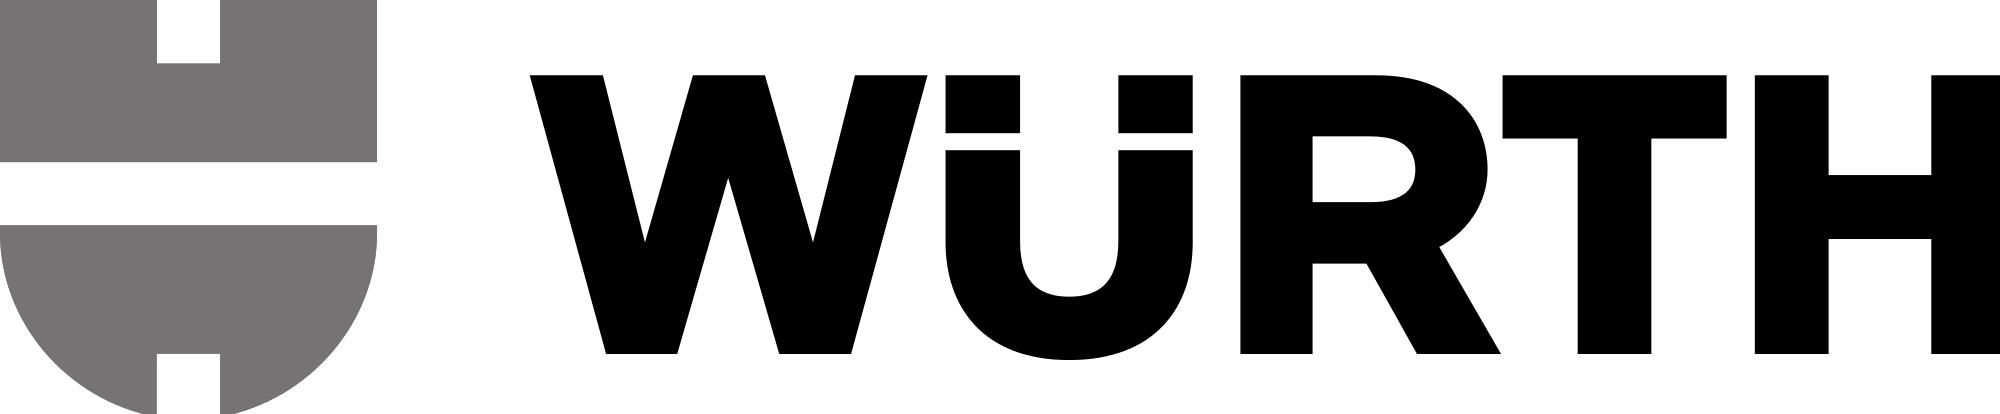 Würth_Logo_2010.svg